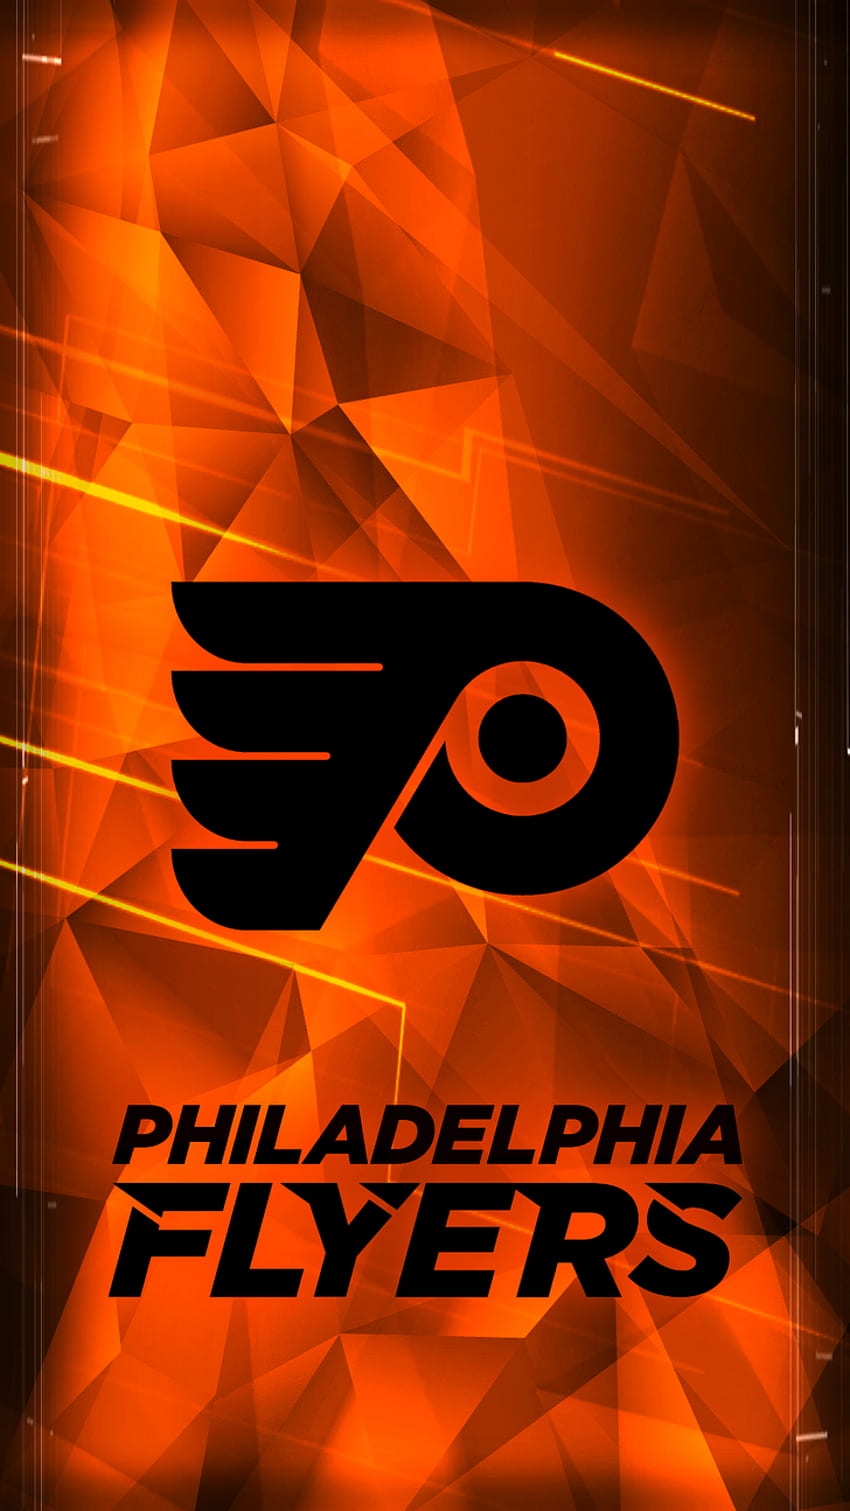 1920x1080px, 1080P Free download | Philadelphia Flyers Stadium Series ...